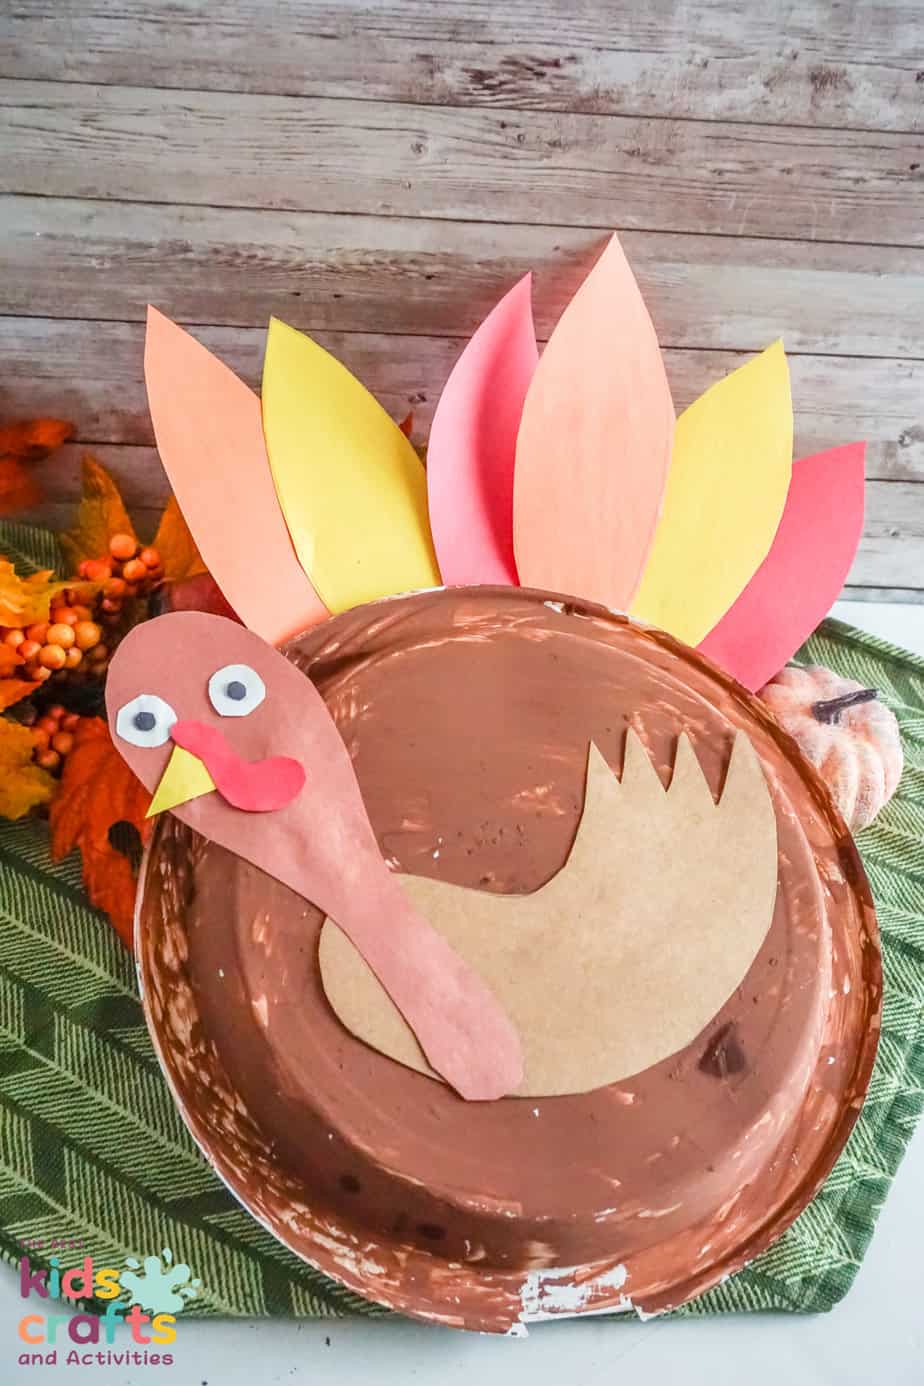 Thanksgiving Turkey Paper Plate Craft